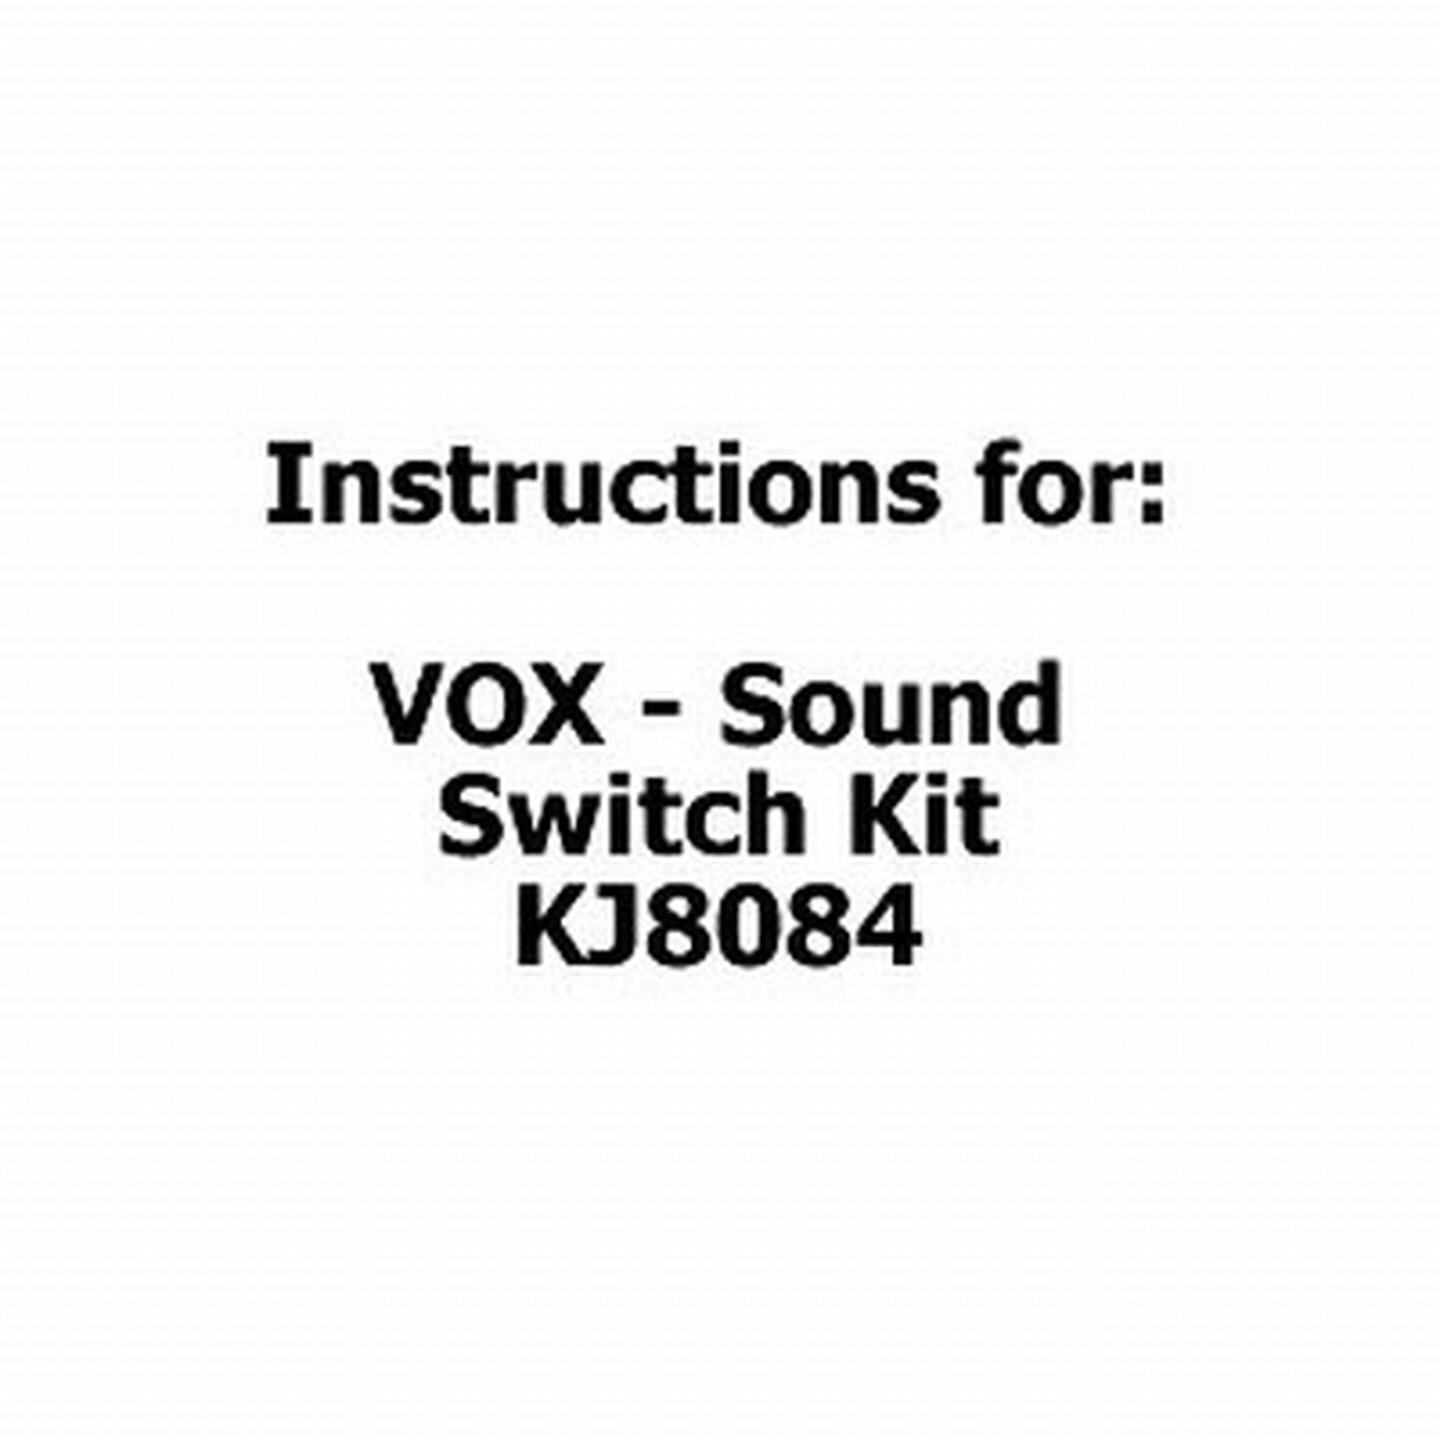 Instructions for VOX - Sound Switch Kit KJ8084